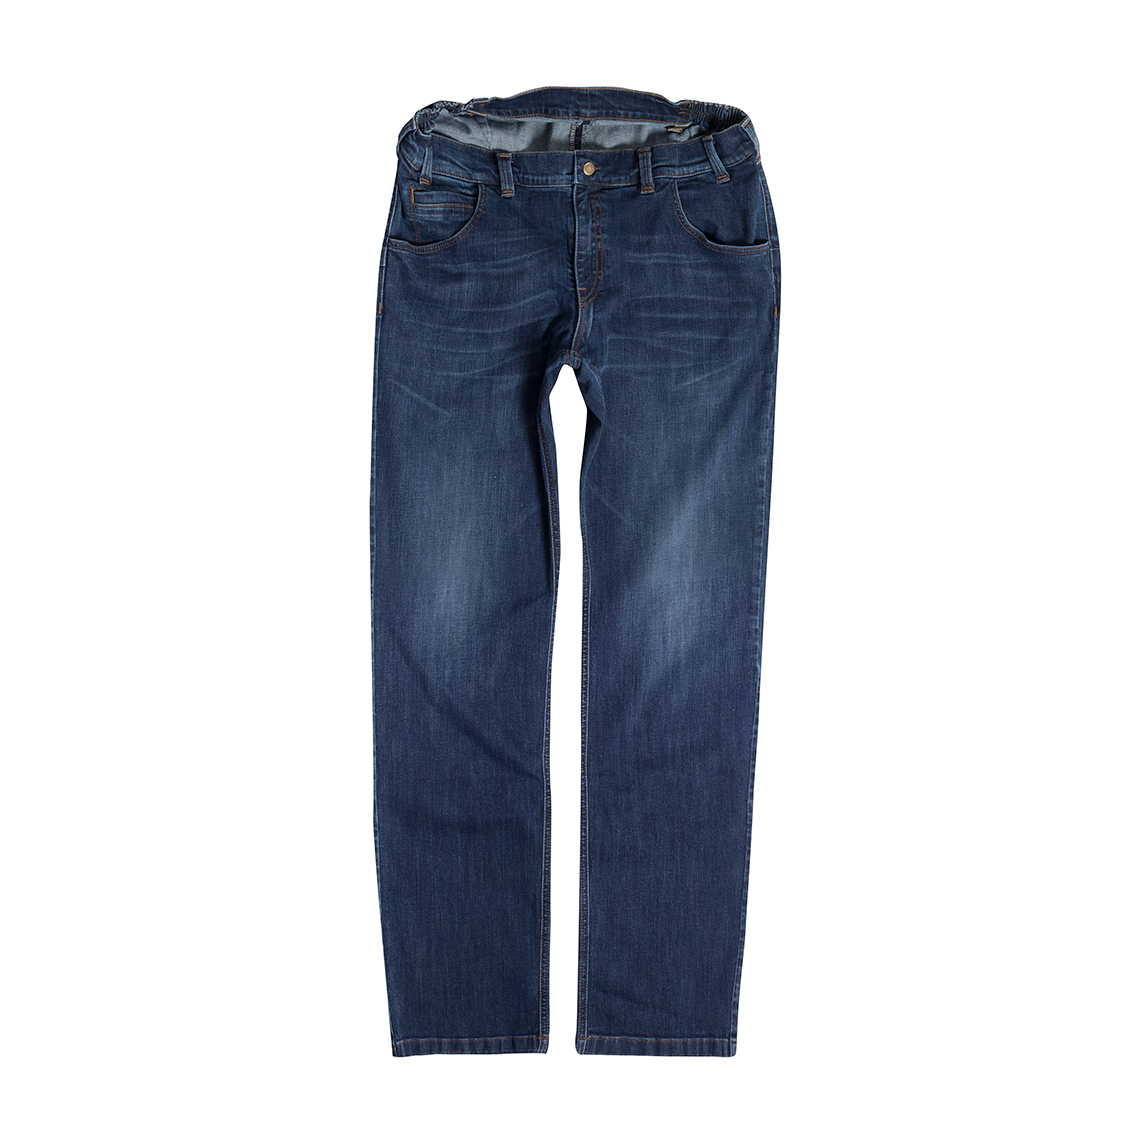 Herren Jeans  Fashion washed, blau MIKE 10391 46